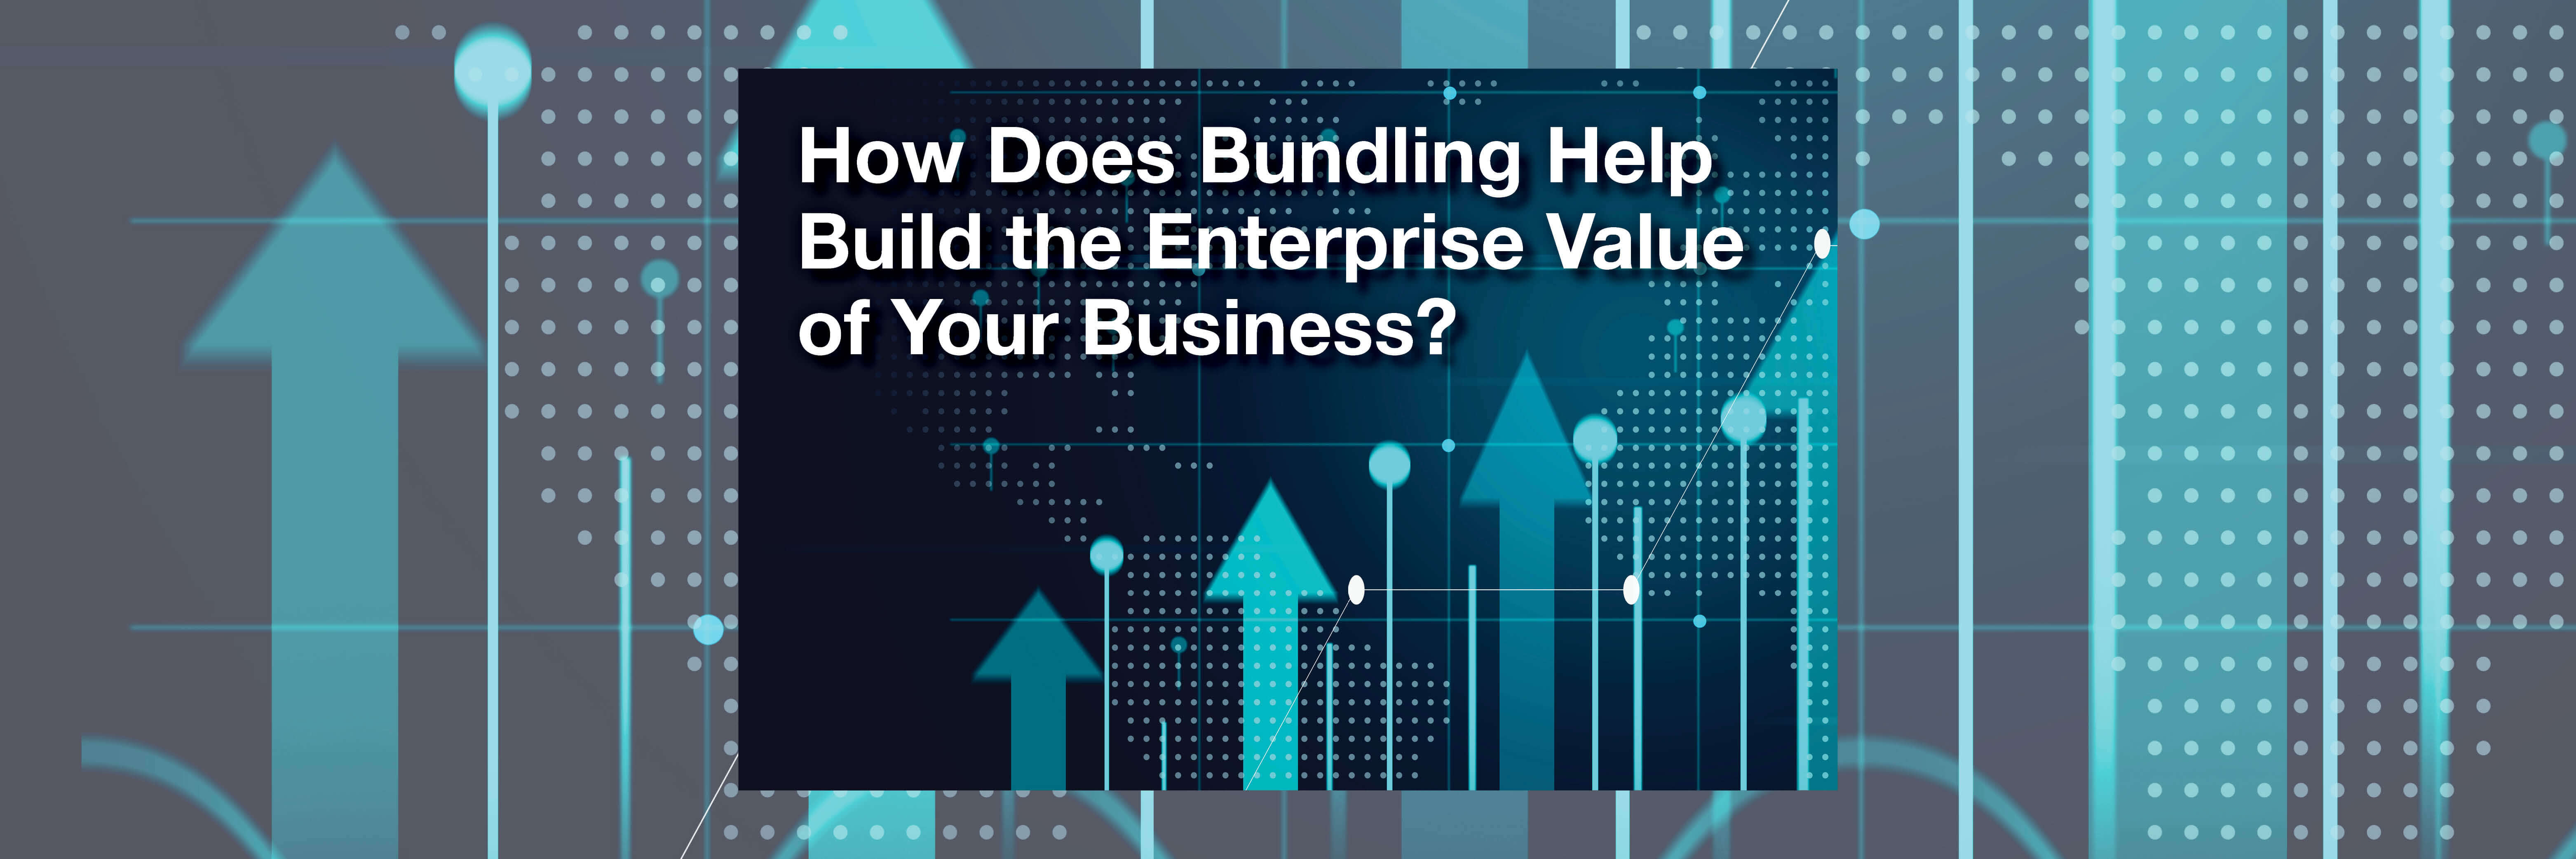 How does bundling help build the enterprise value of your business?